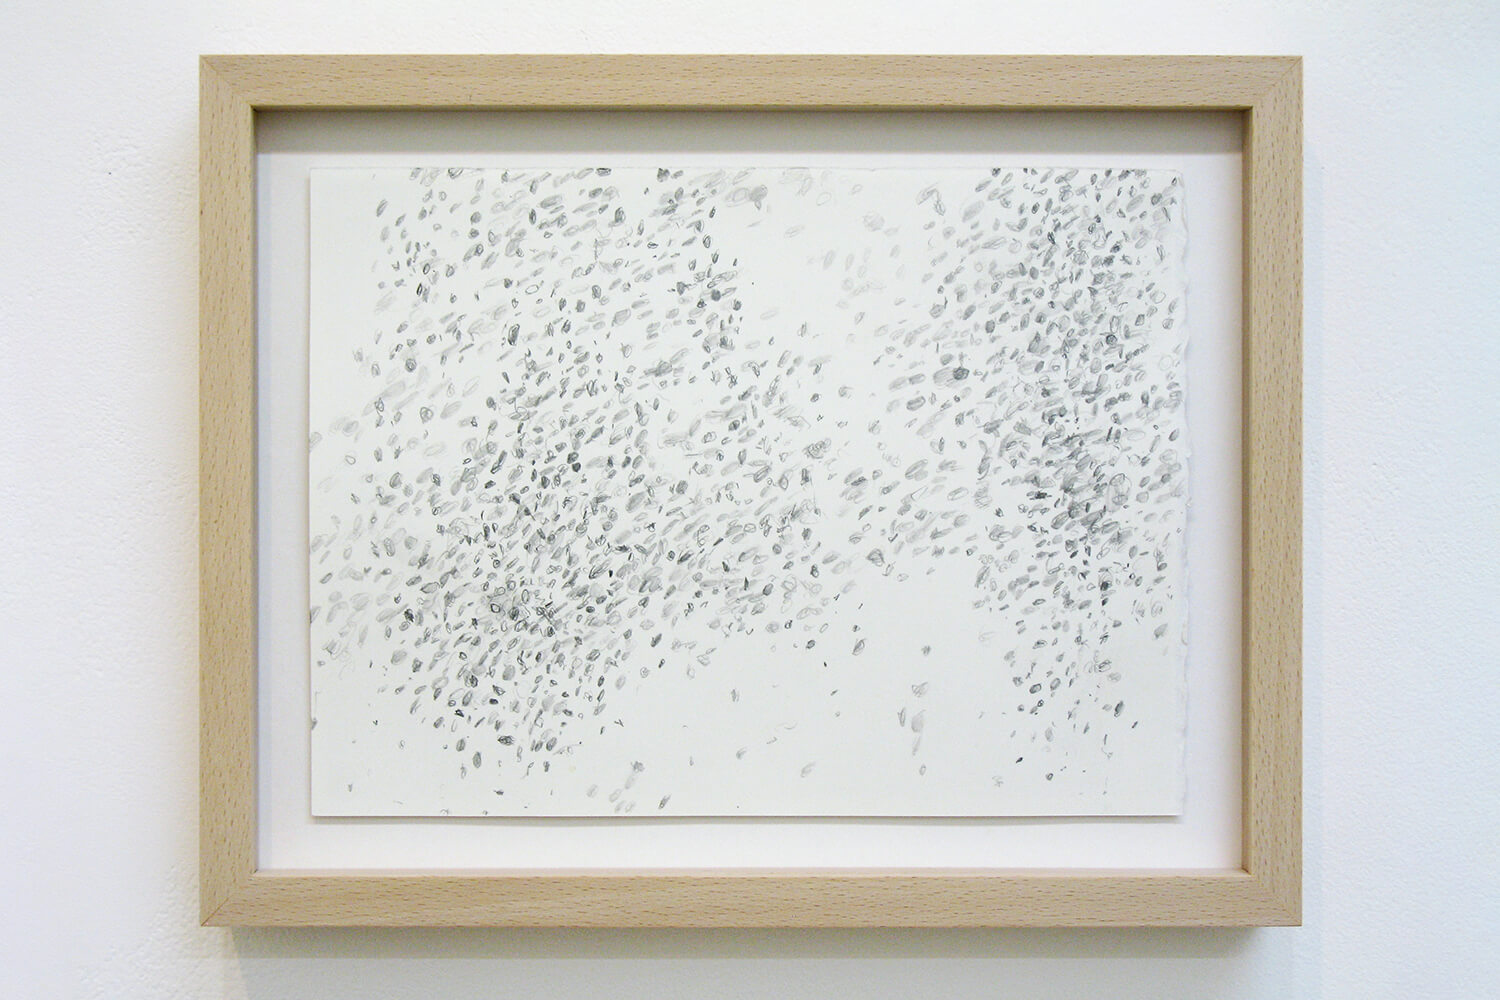 When the Dust Settles (d5)<br>Pencil on paper, 18.9 x 26 cm, 2010